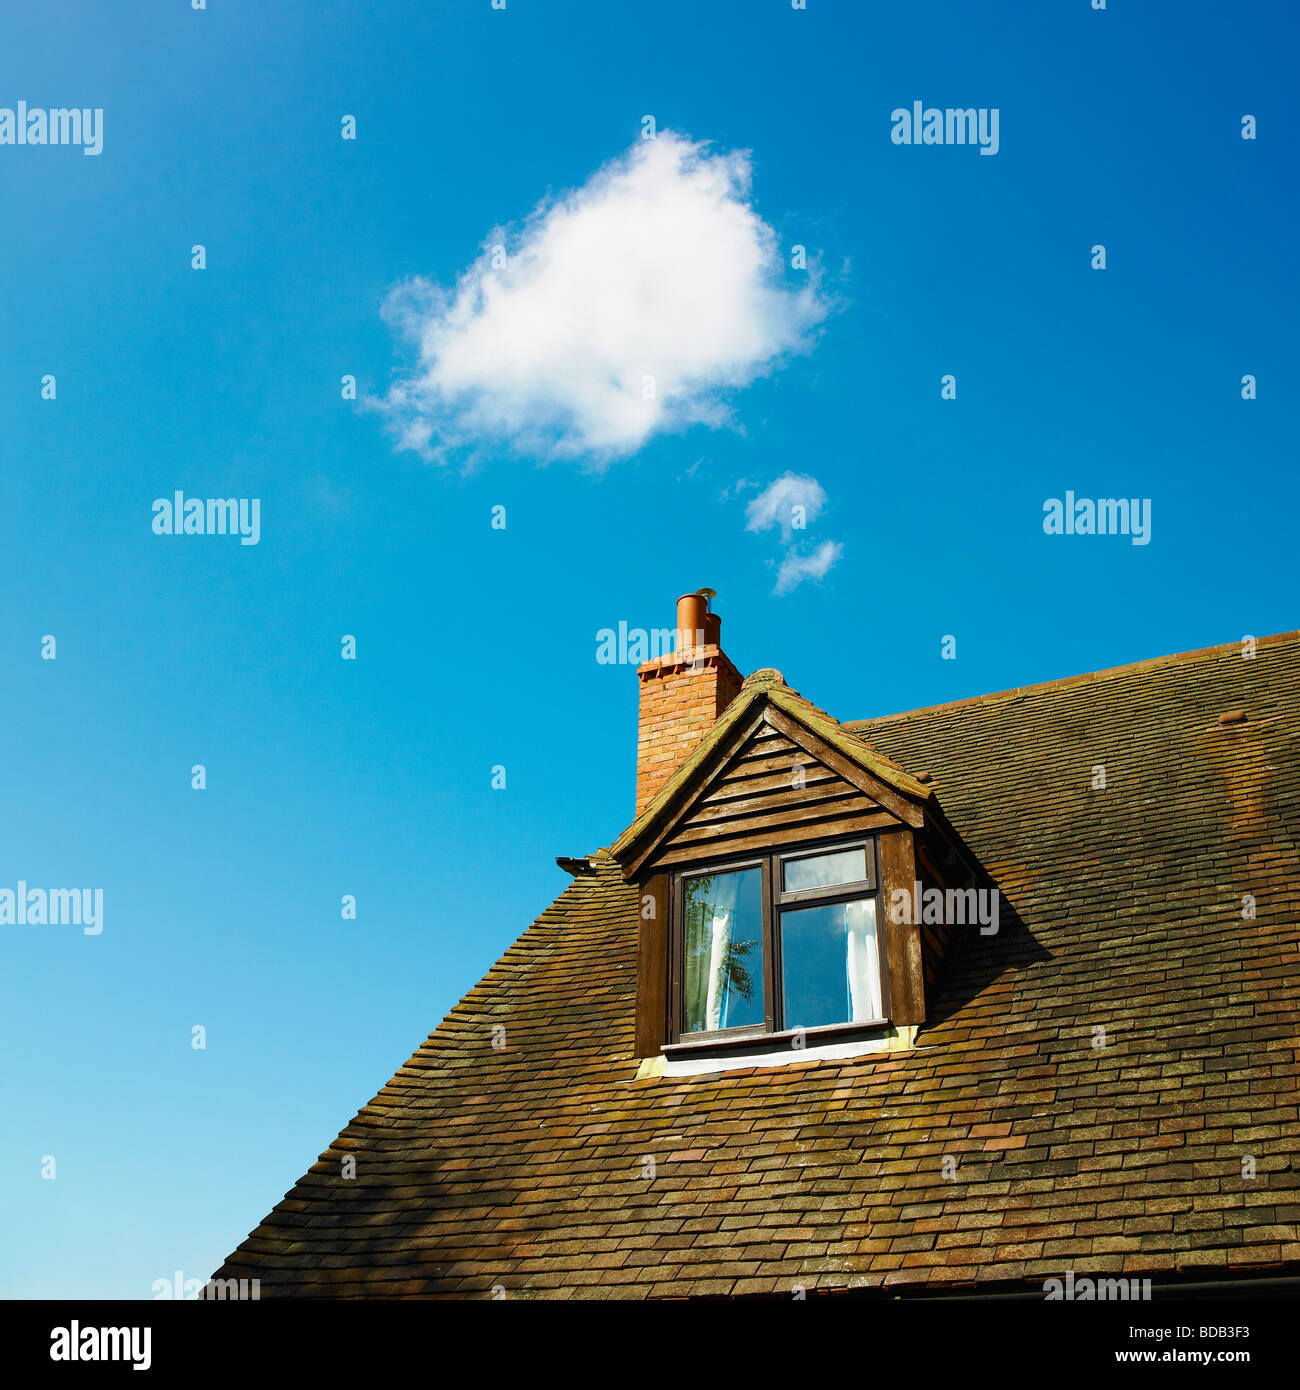 Casa con cloud e cielo blu - cloud computing - casa ufficio - pensare casa - pensare casa - casa pensare - bolla di pensiero Foto Stock